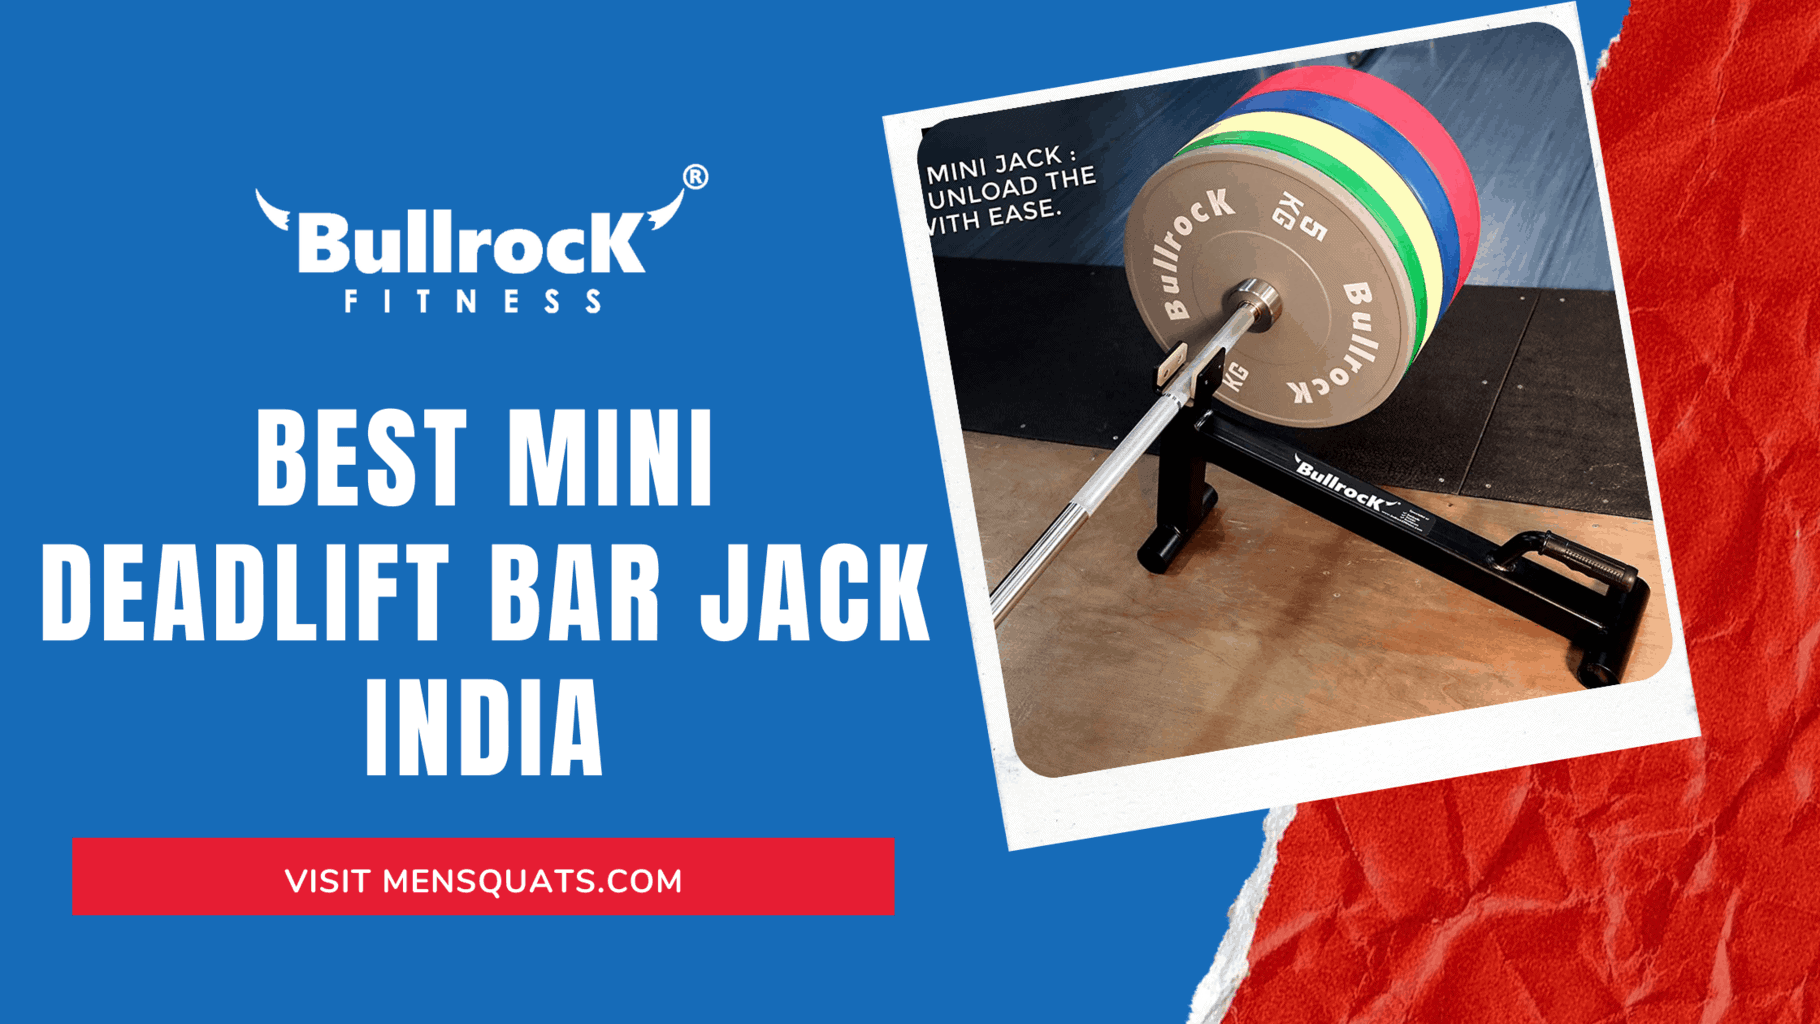 Best mini deadlift jack review by mensquats.com